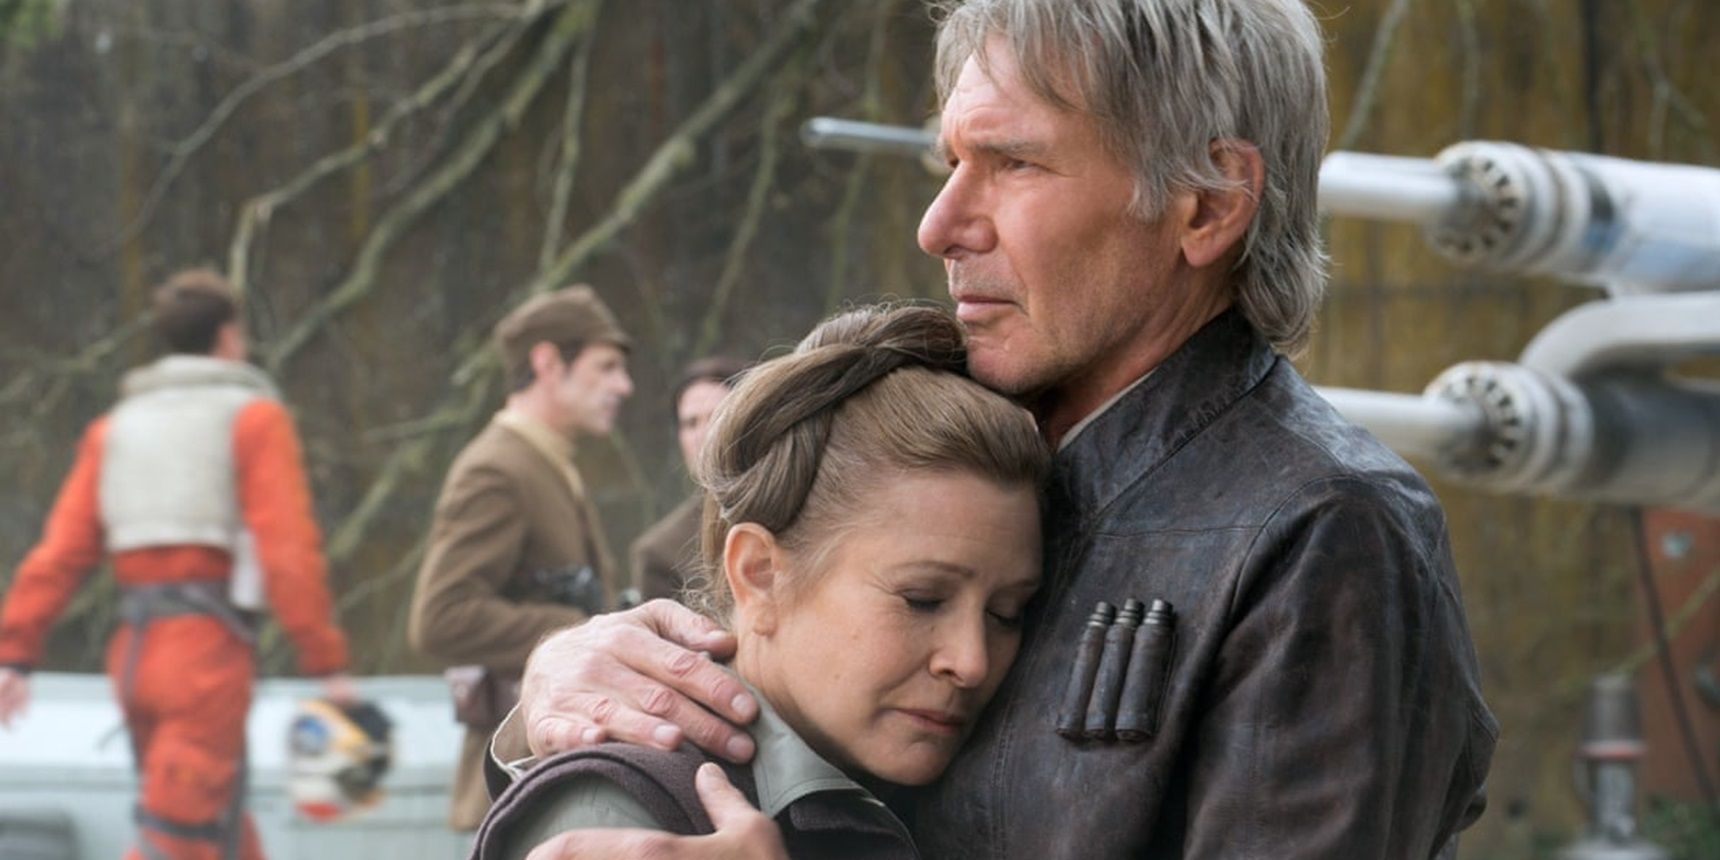 Leia hugs Han in The Force Awakens.